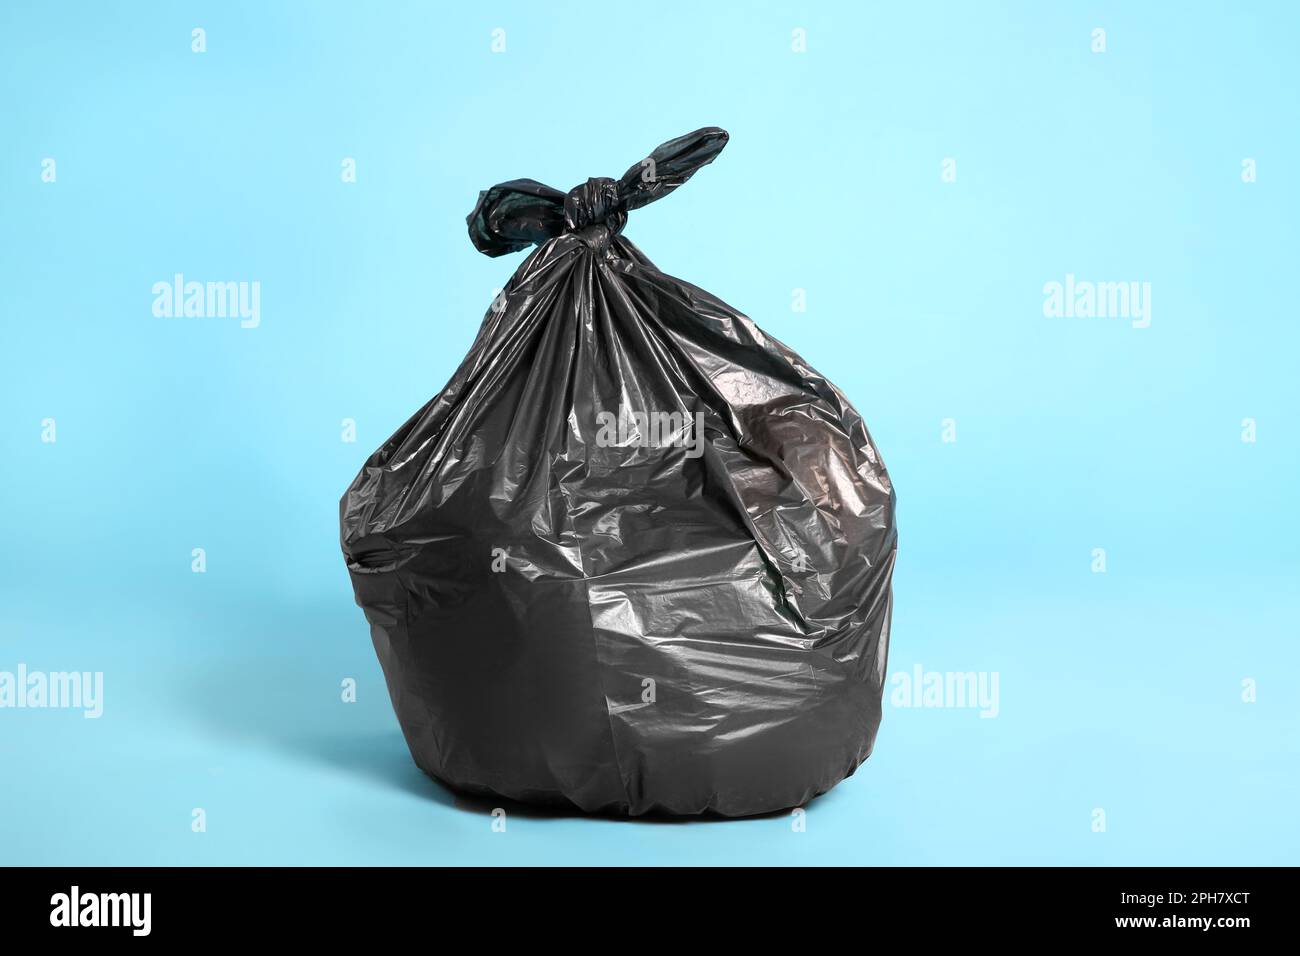 https://c8.alamy.com/comp/2PH7XCT/black-trash-bag-full-of-garbage-on-light-blue-background-2PH7XCT.jpg